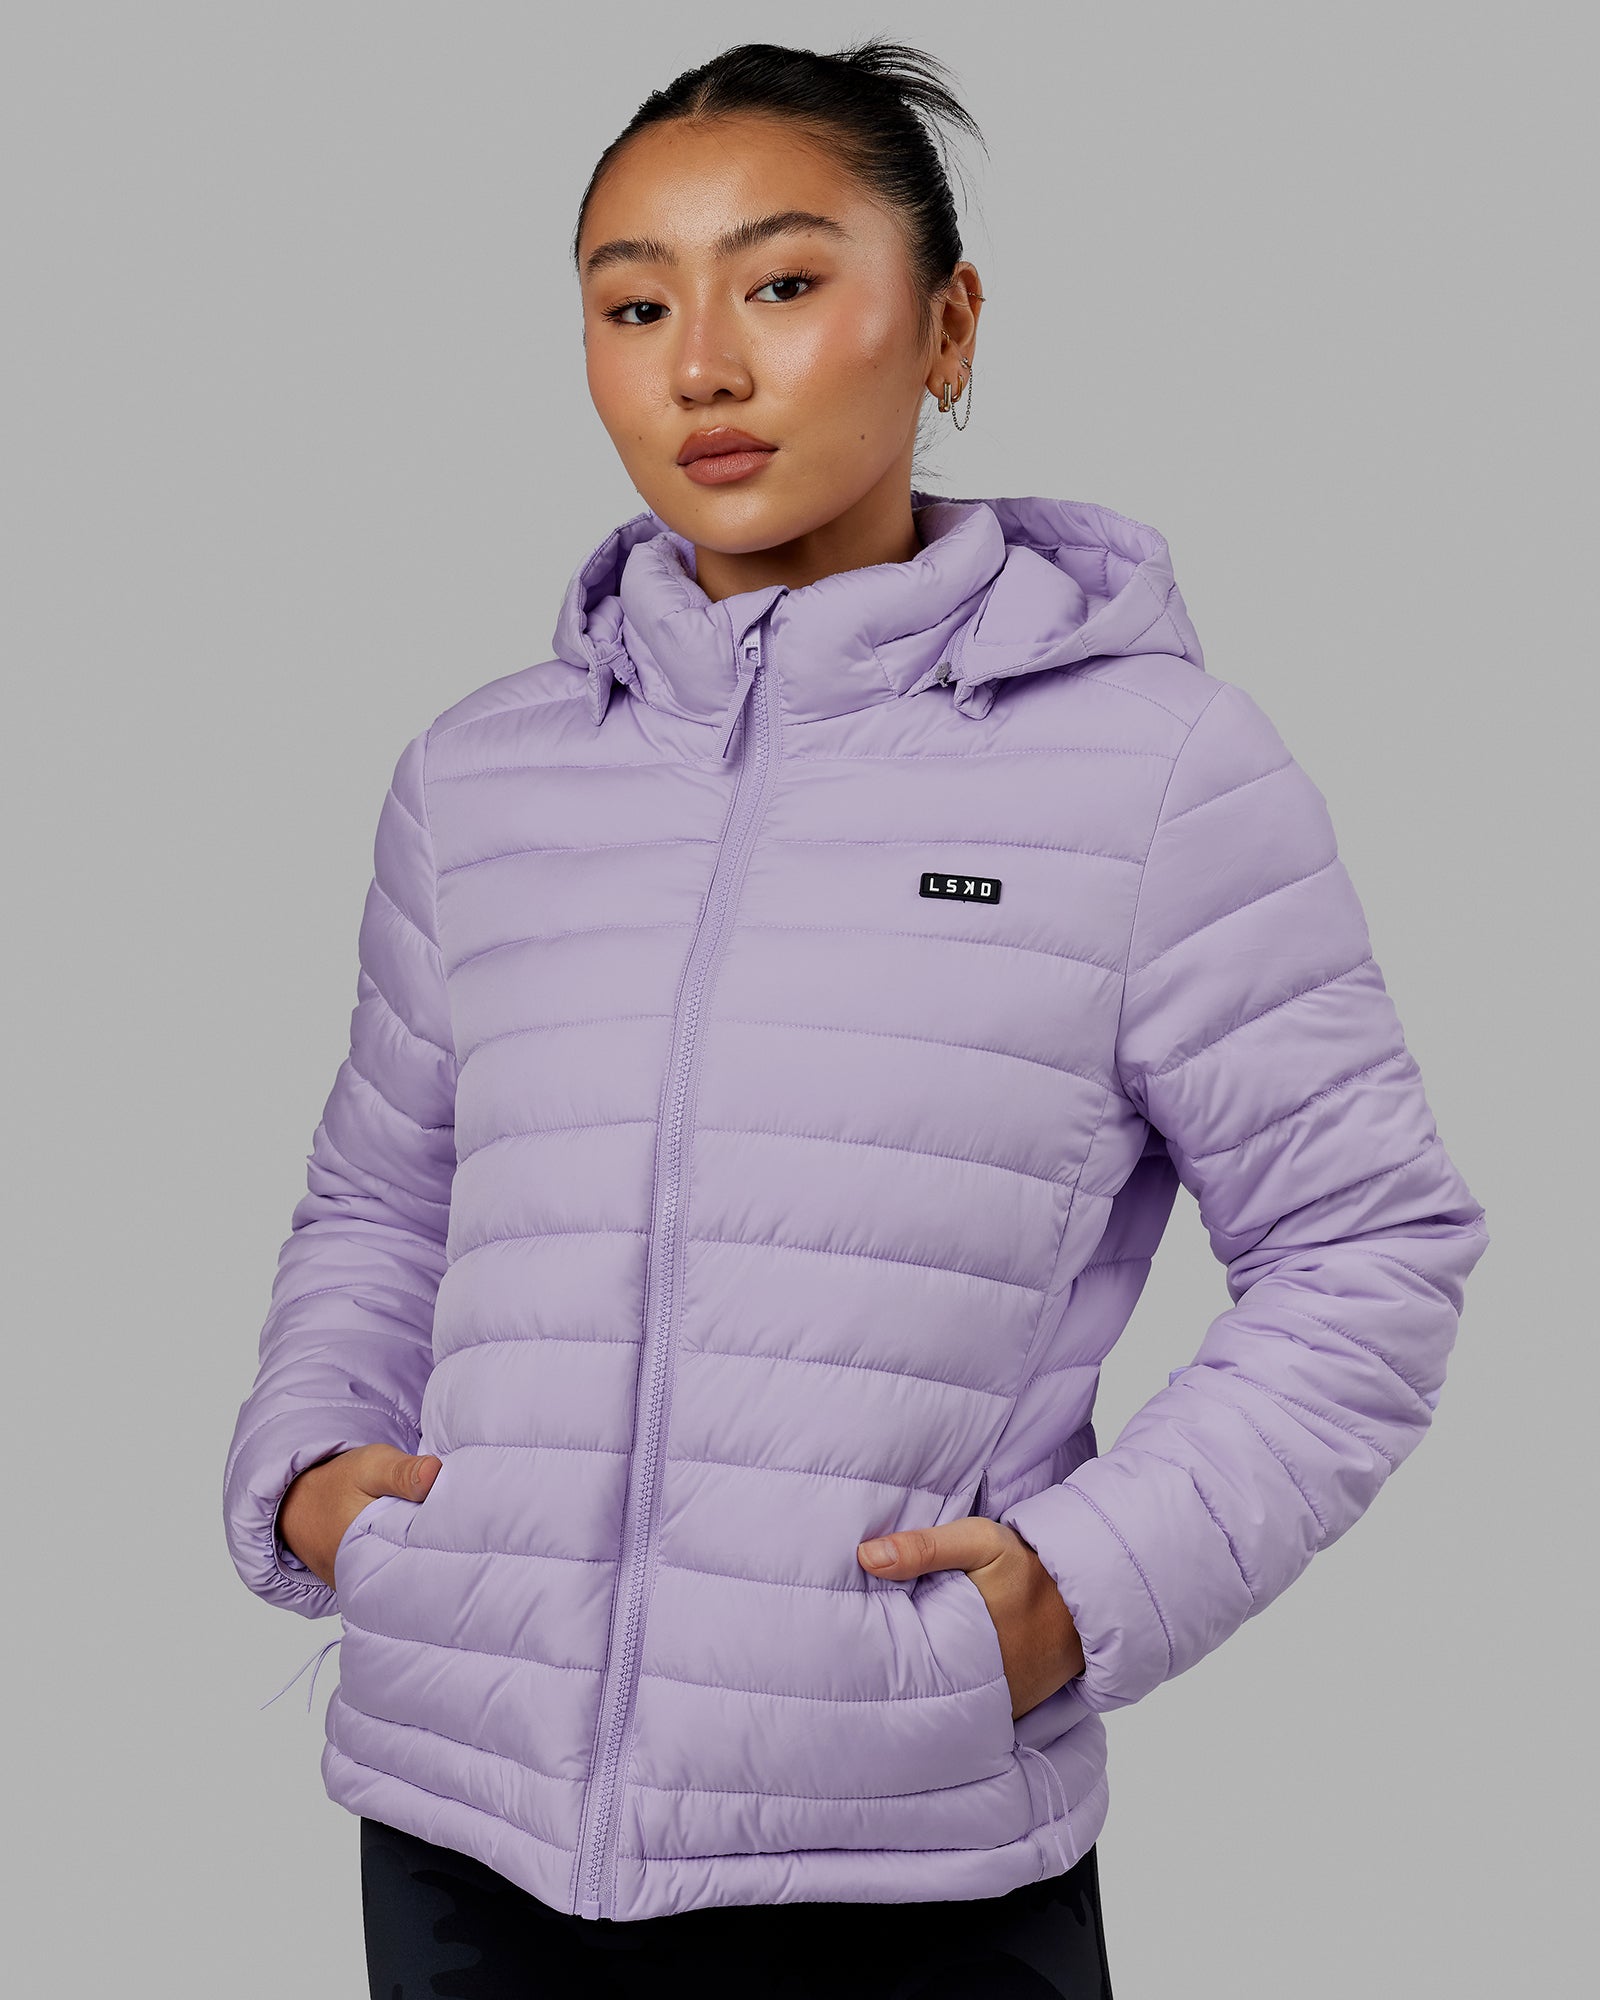 Patagonia Women's Nano Puff Jacket Vest Parka All Colors S M L XL